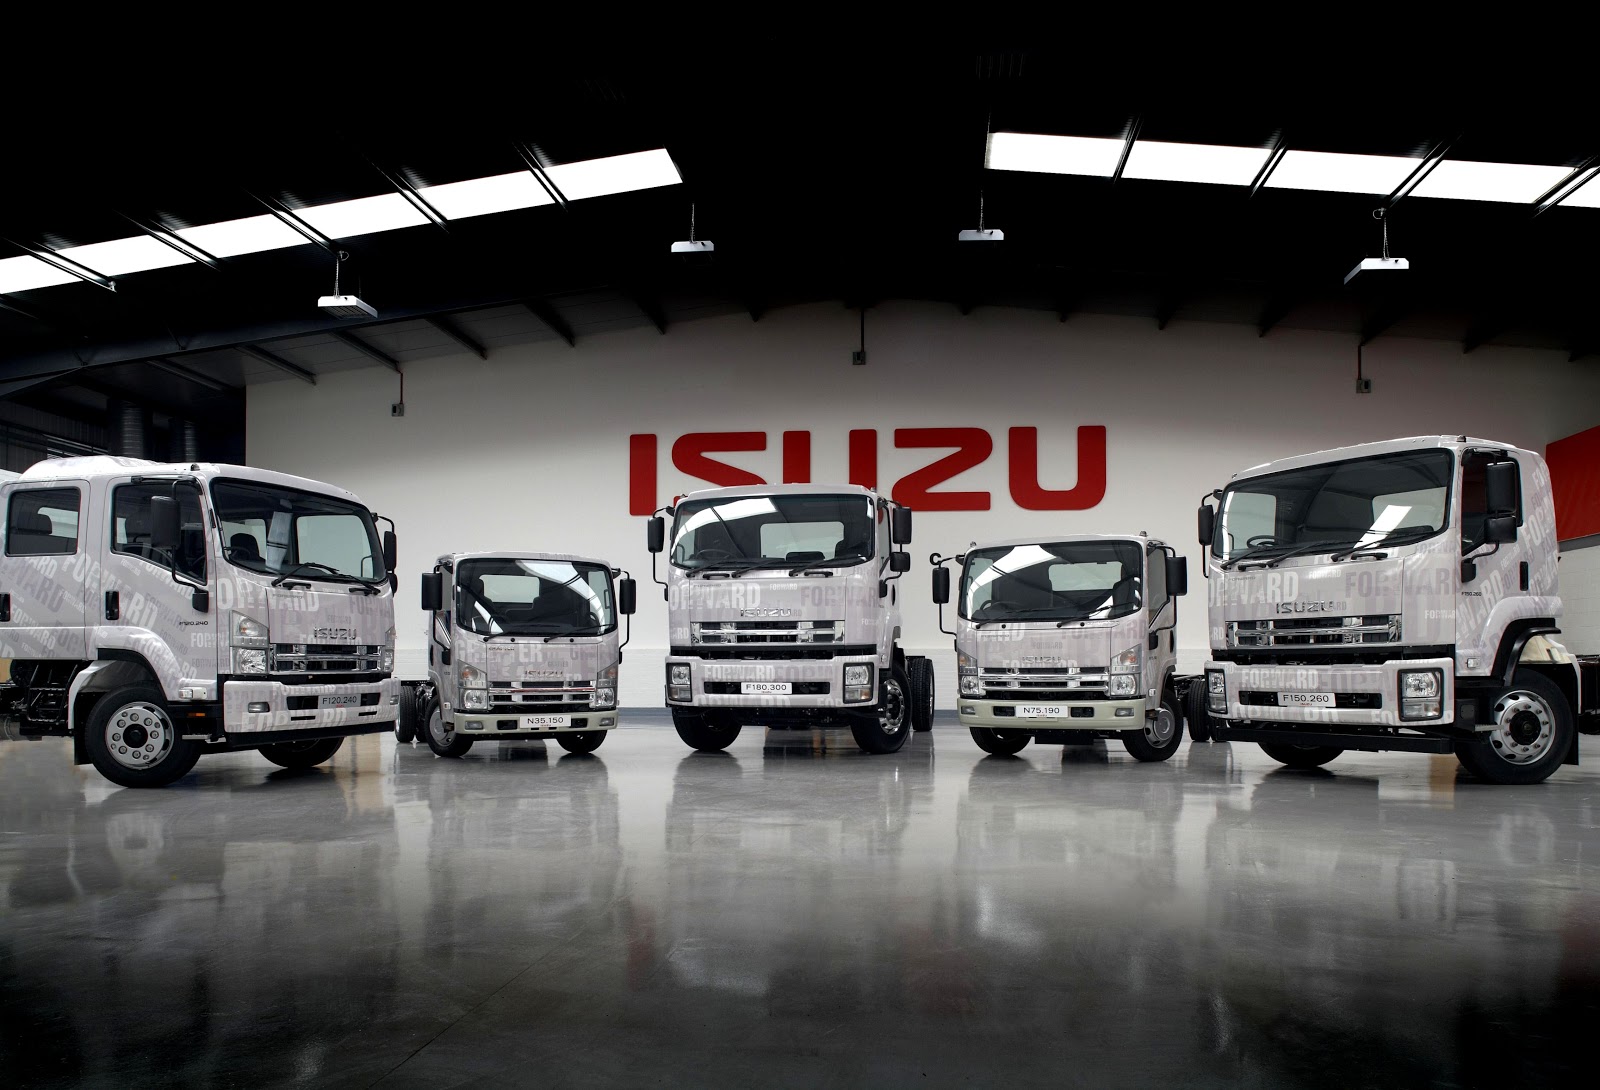 used Isuzu trucks in Melbourne